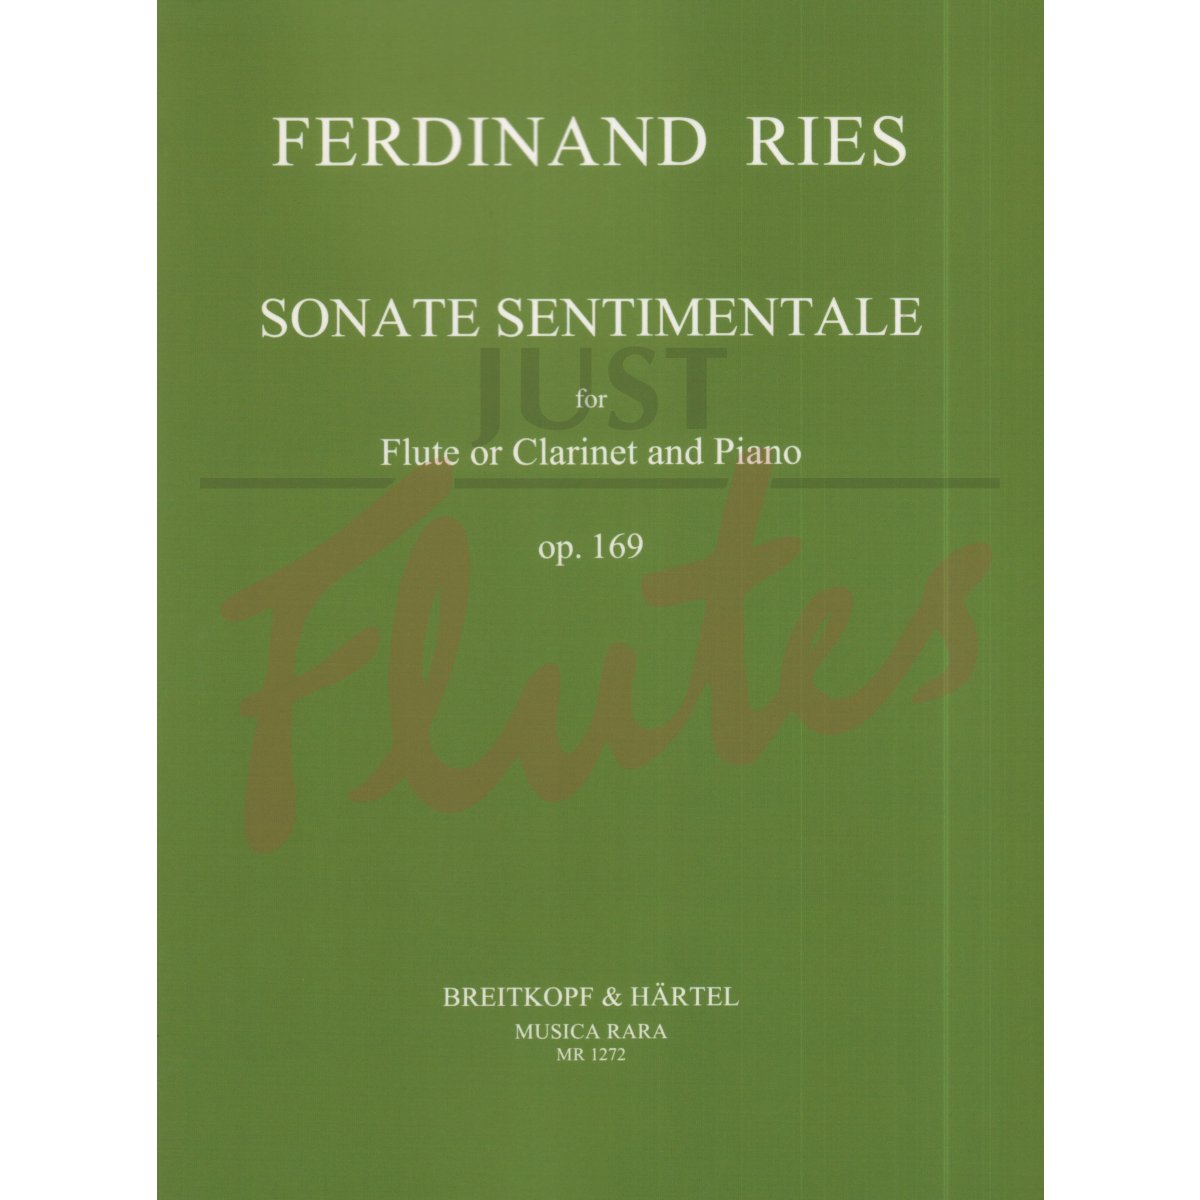 Sonata Sentimentale for Flute (or Clarinet) and Piano